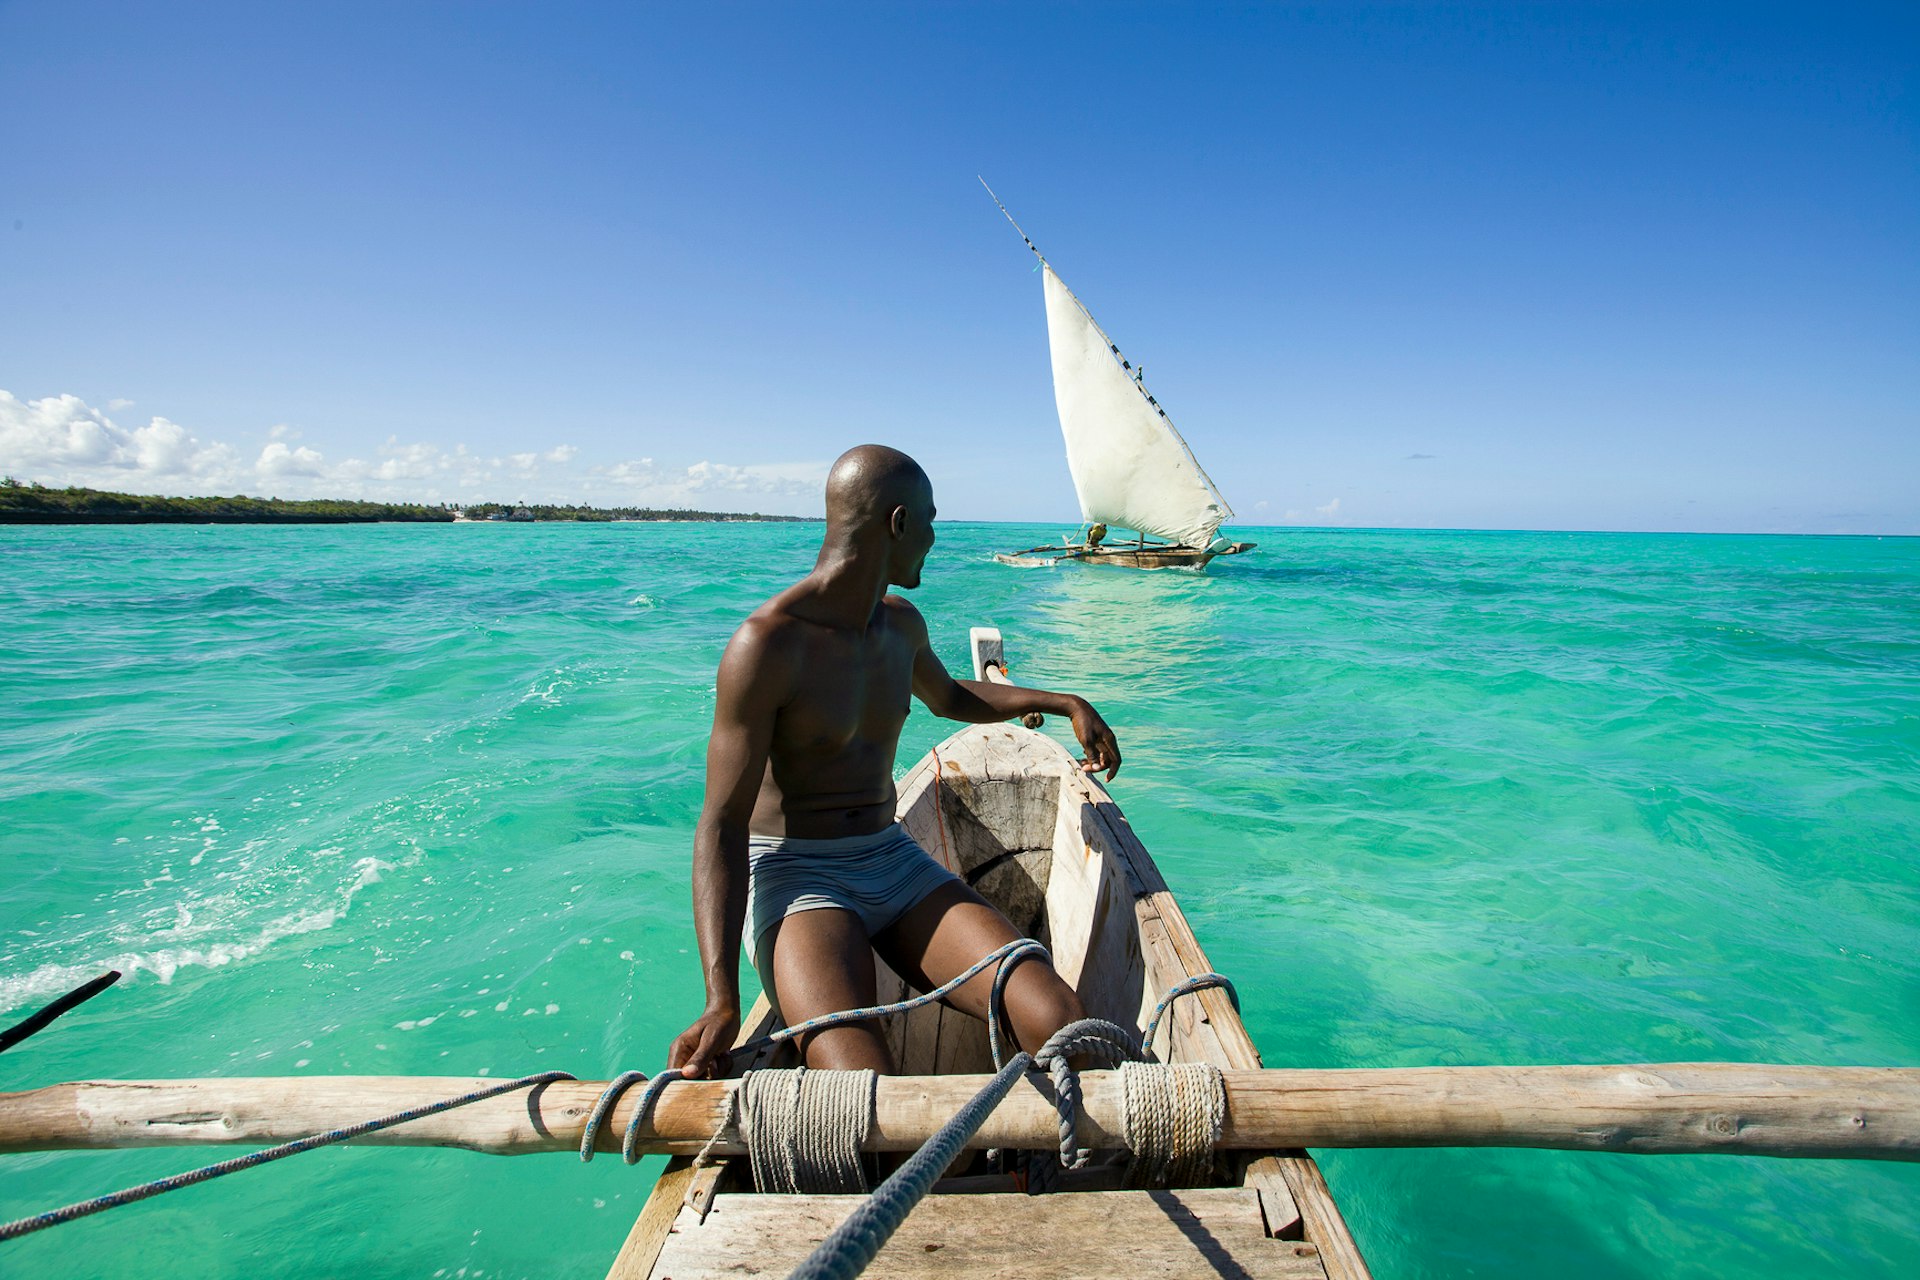 Outrigger sailing boat off the coast of Zanzibar